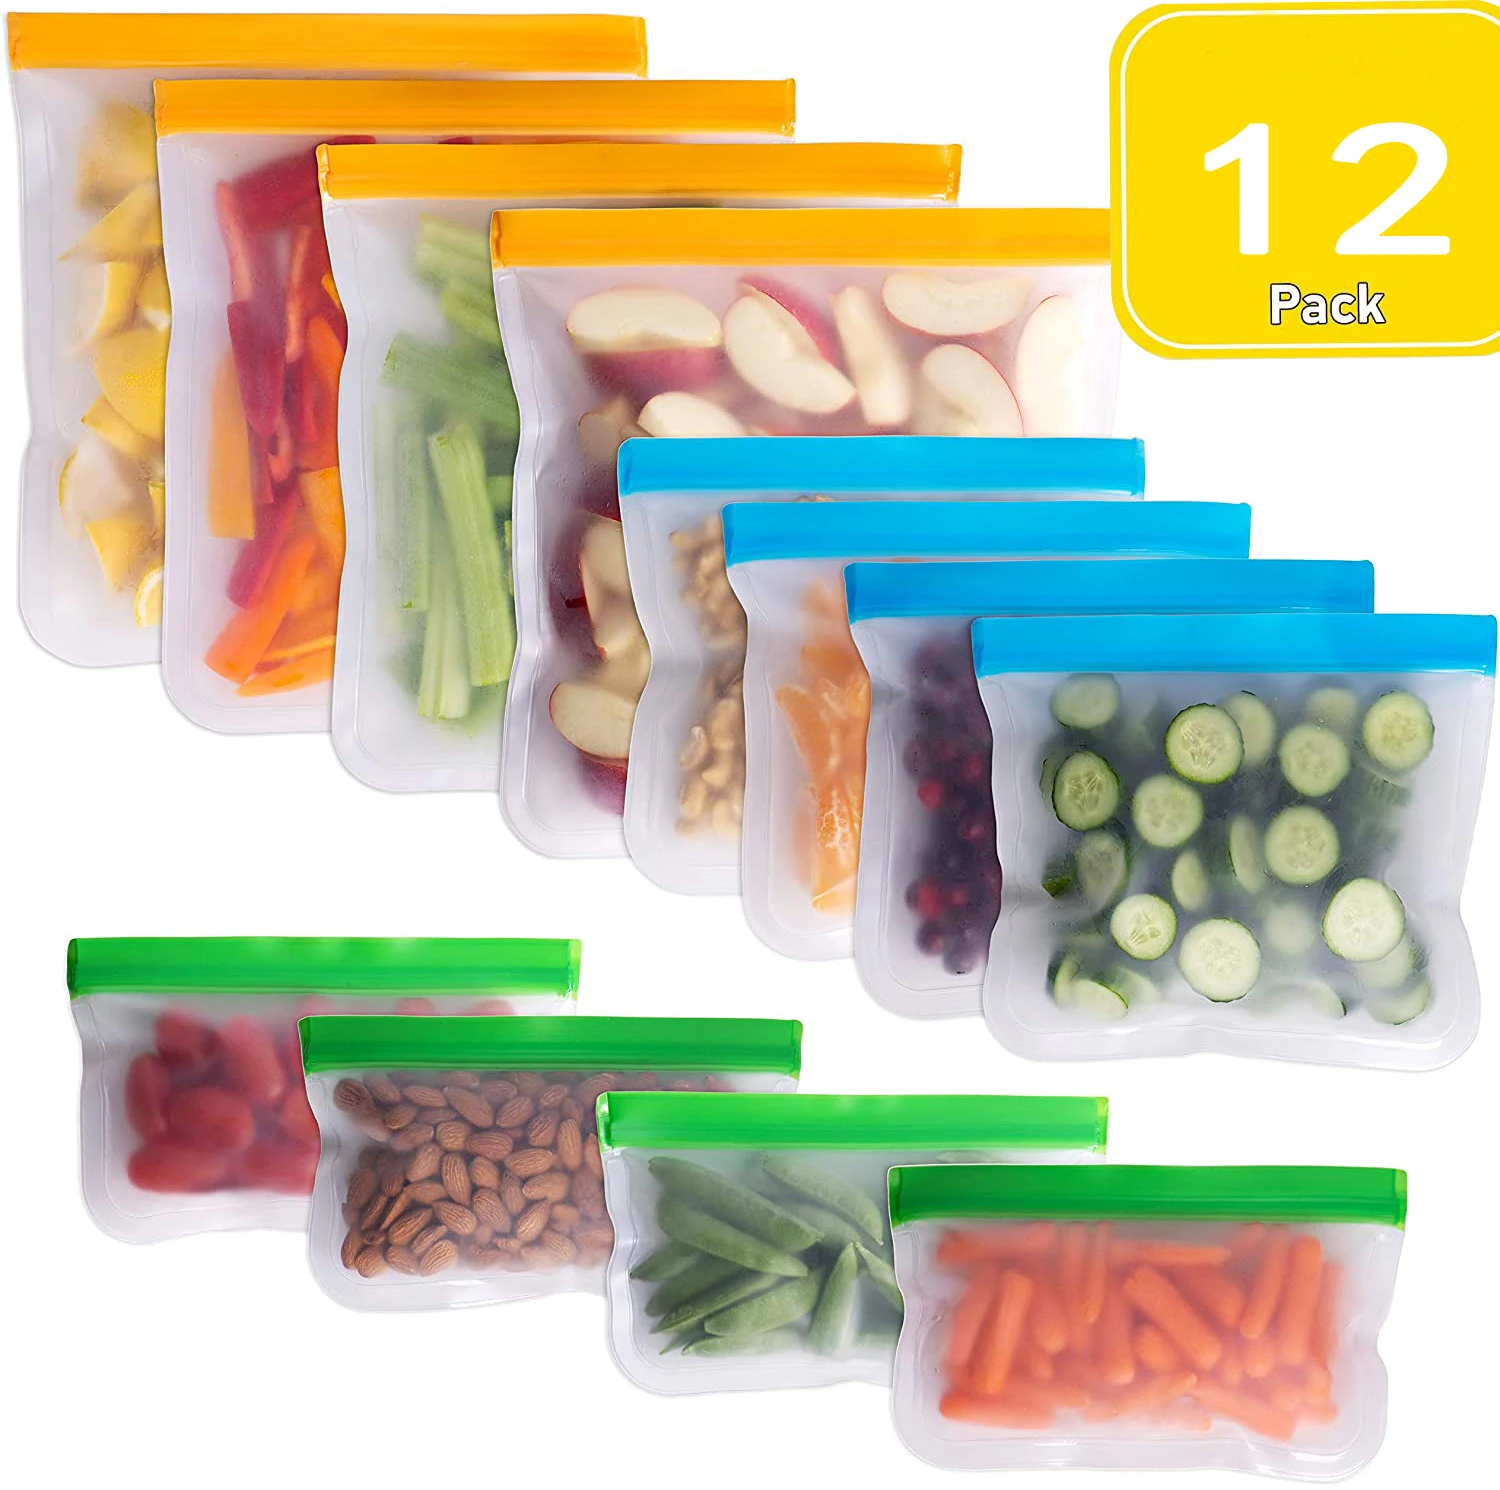 

12pcs Reusable Food Storage Bags Flat Freezer Bags Gallon Leakproof Sandwich Grade Snack Bags Lunch Bag for Meat Fruit Veggies